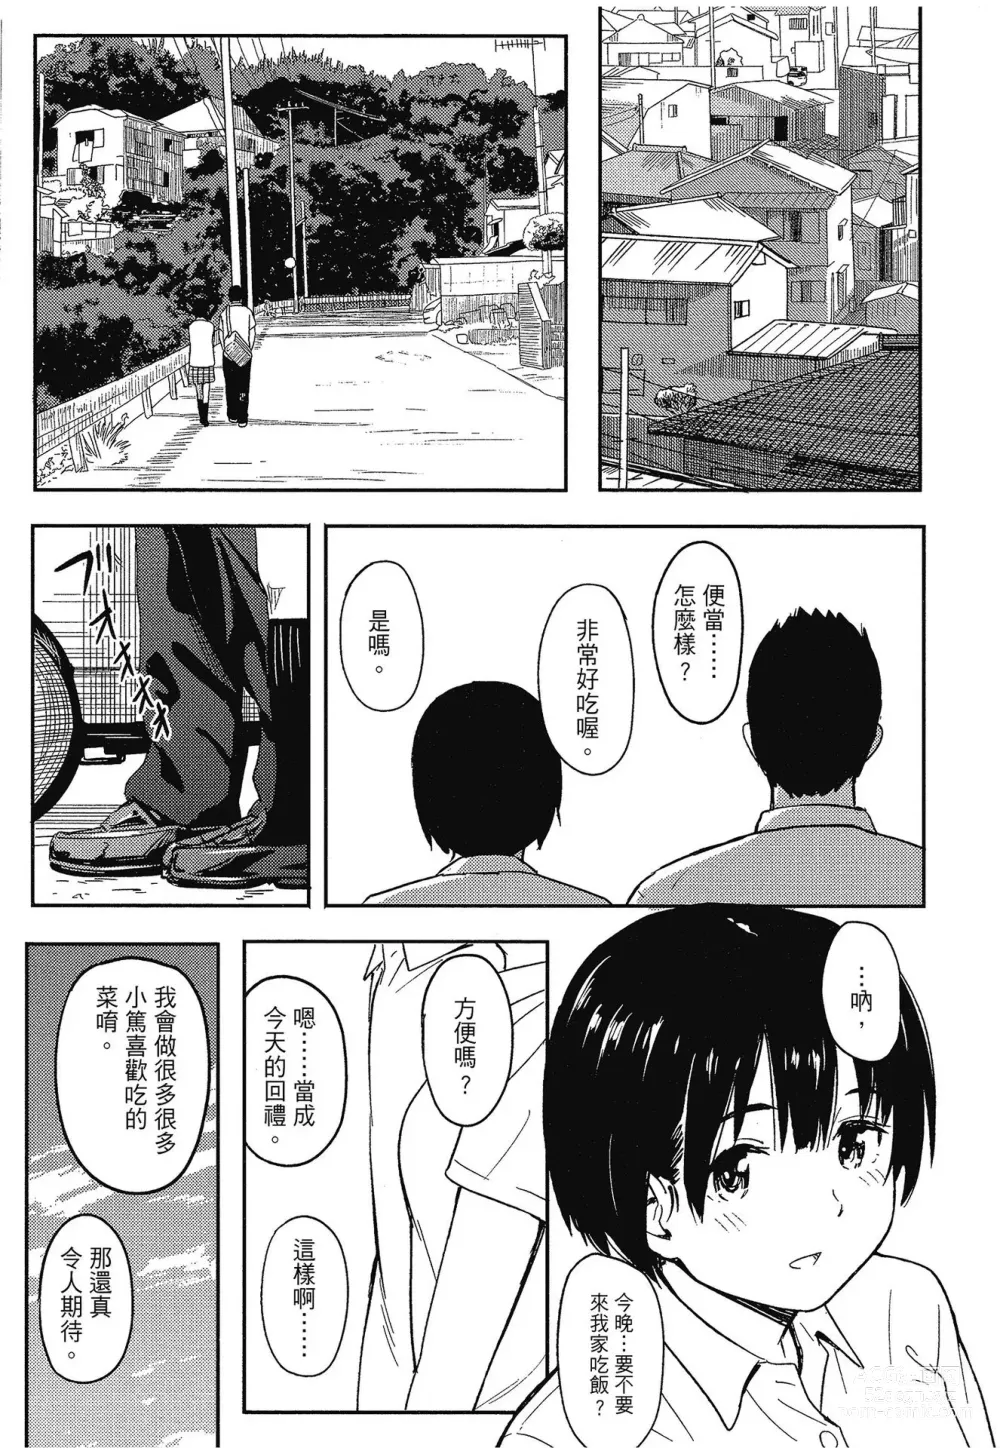 Page 211 of manga 特別的每一天 (decensored)